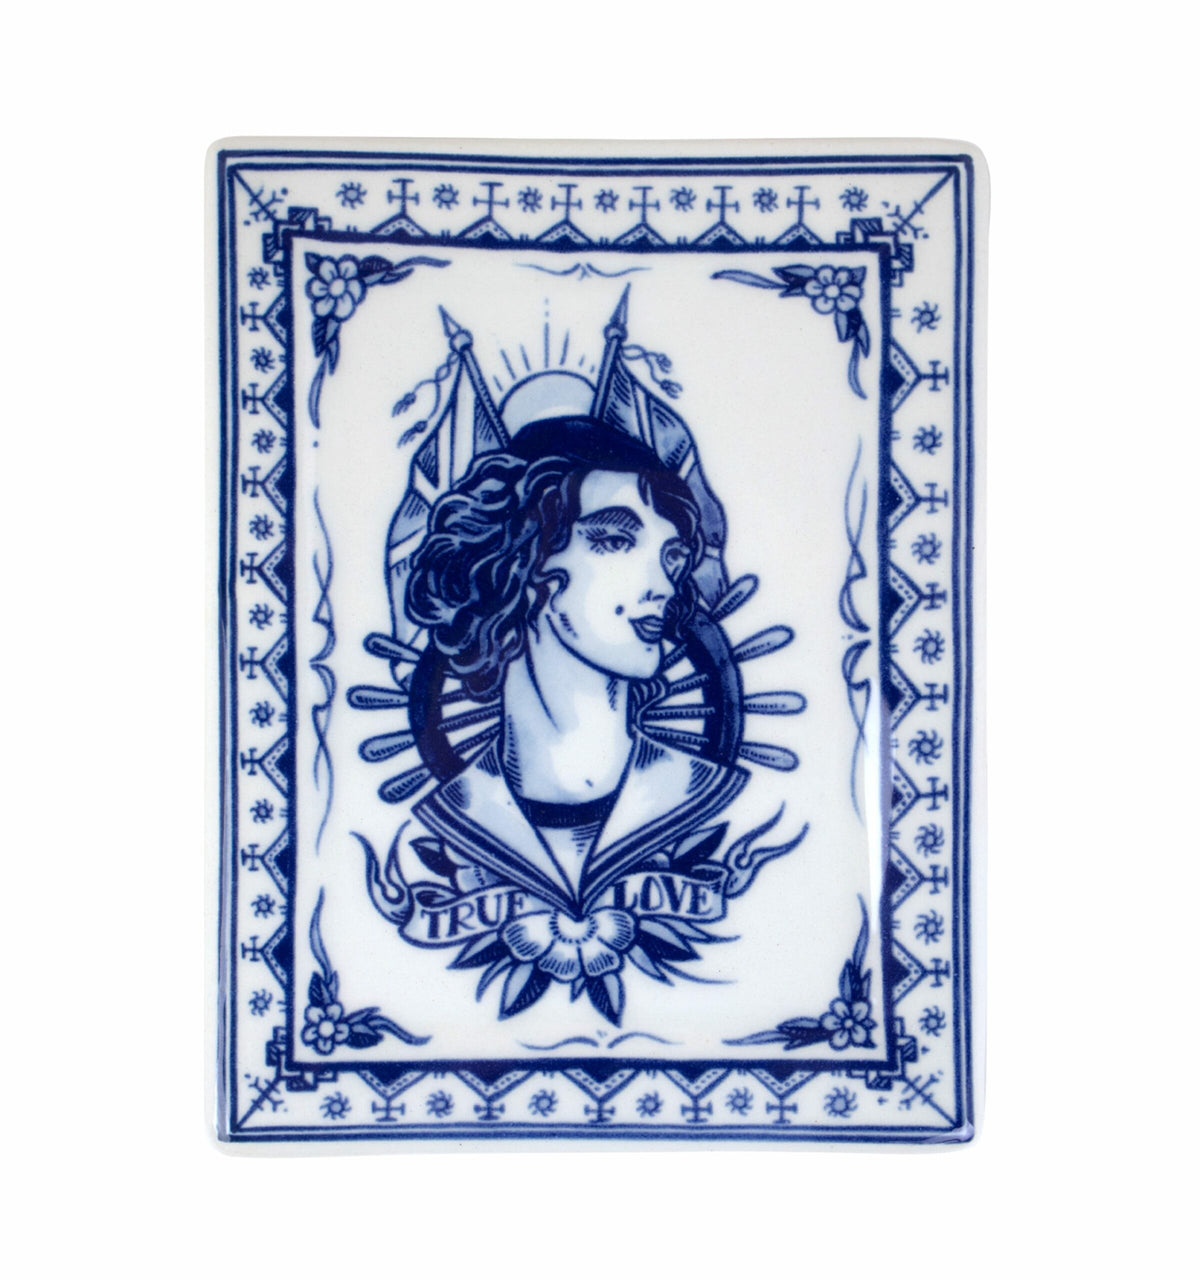 True Love Applique Plate - Schiffmacher Royal Blue Tattoo by Royal Delft